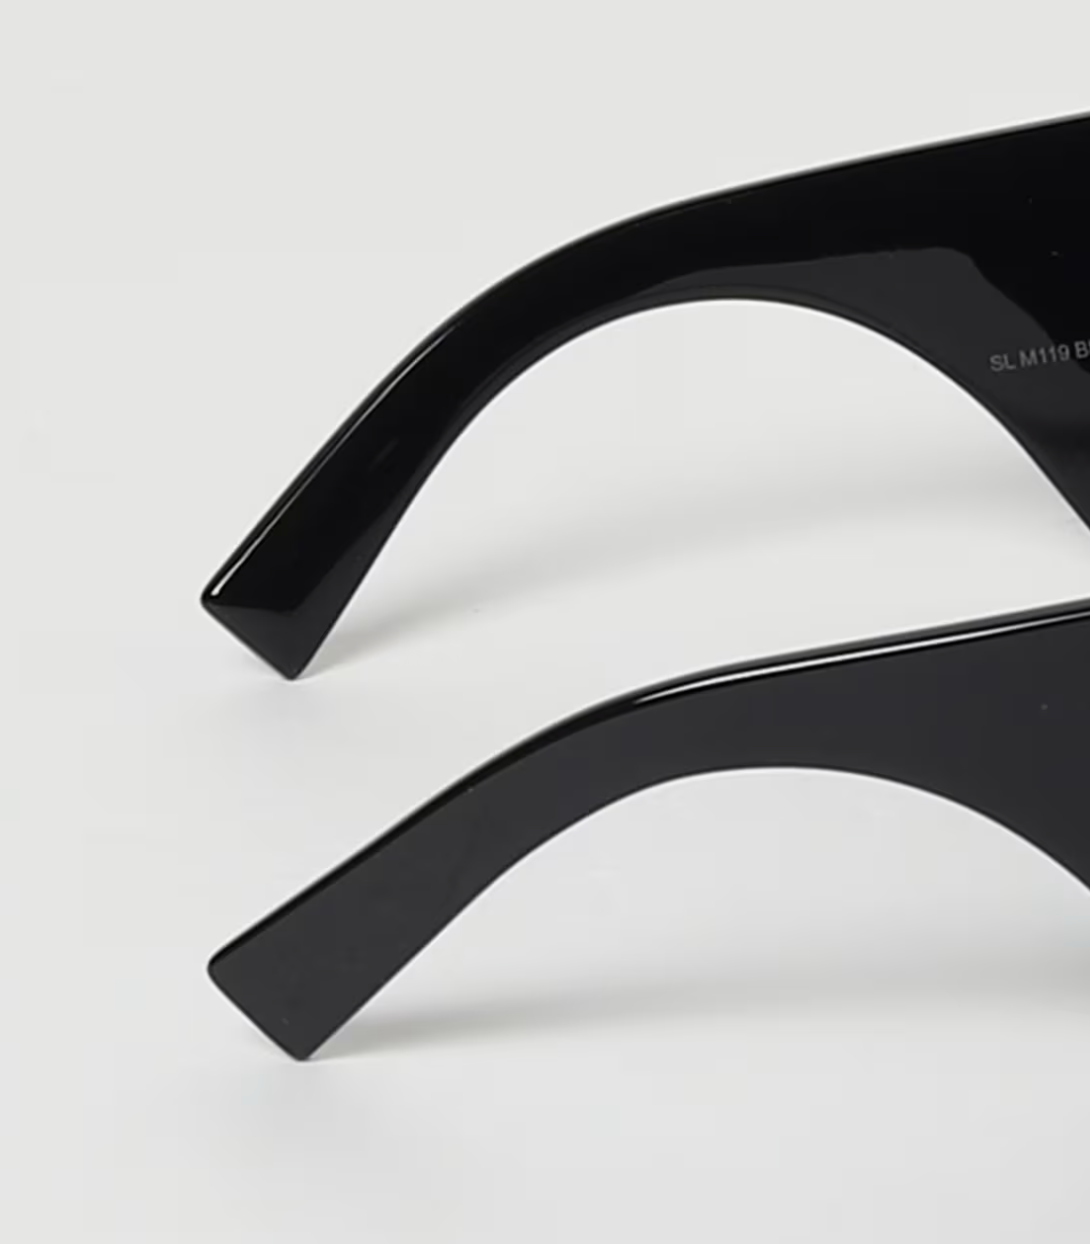 Yves Saint Laurent SL-M119-BLAZE-001 54mm New Sunglasses